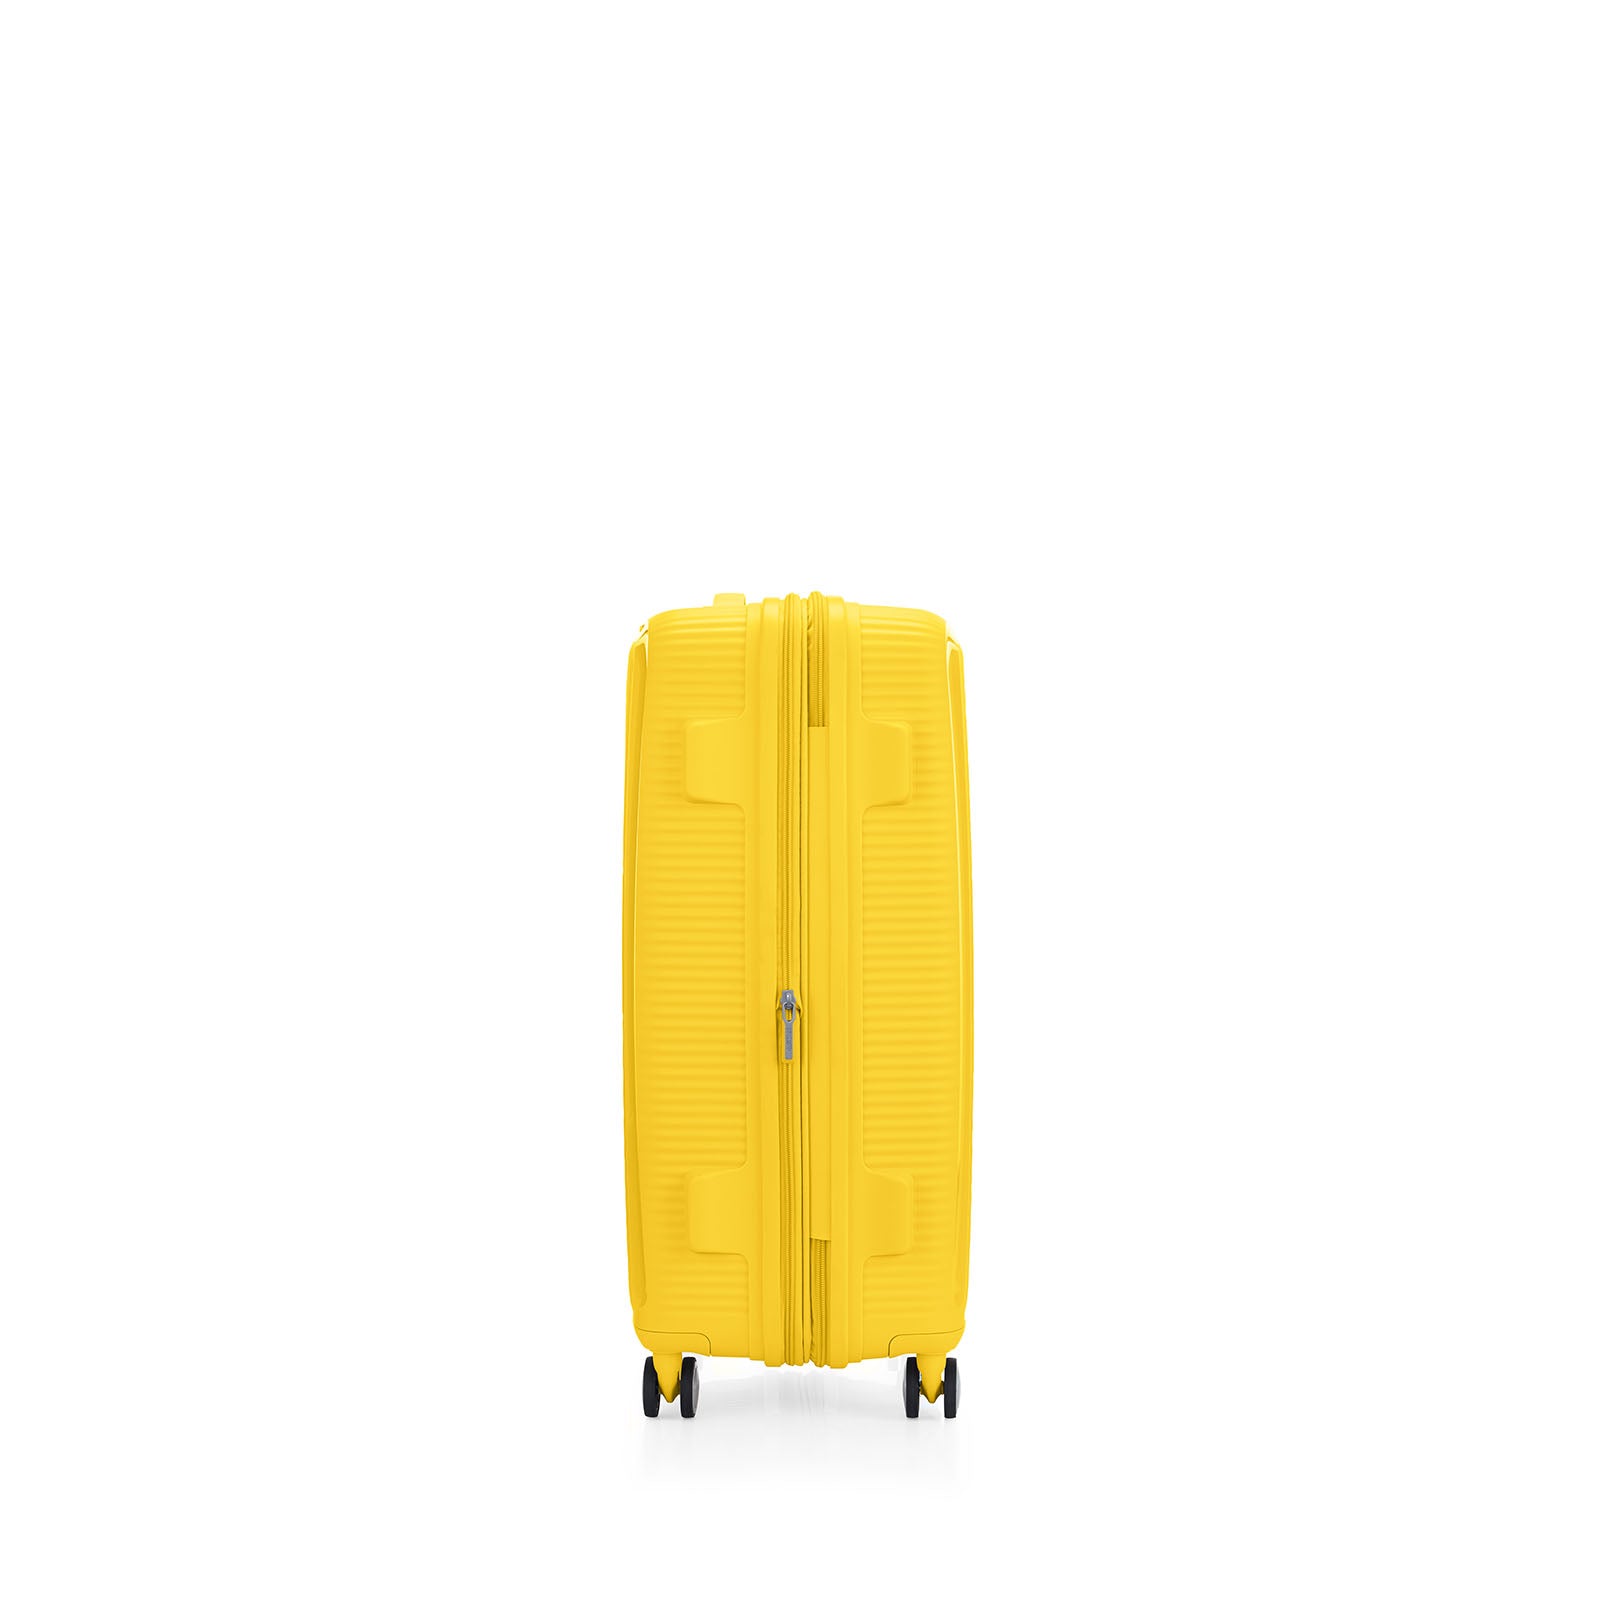 American-Tourister-Curio-2-69cm-Suitcase-Golden-Yellow-Hinge